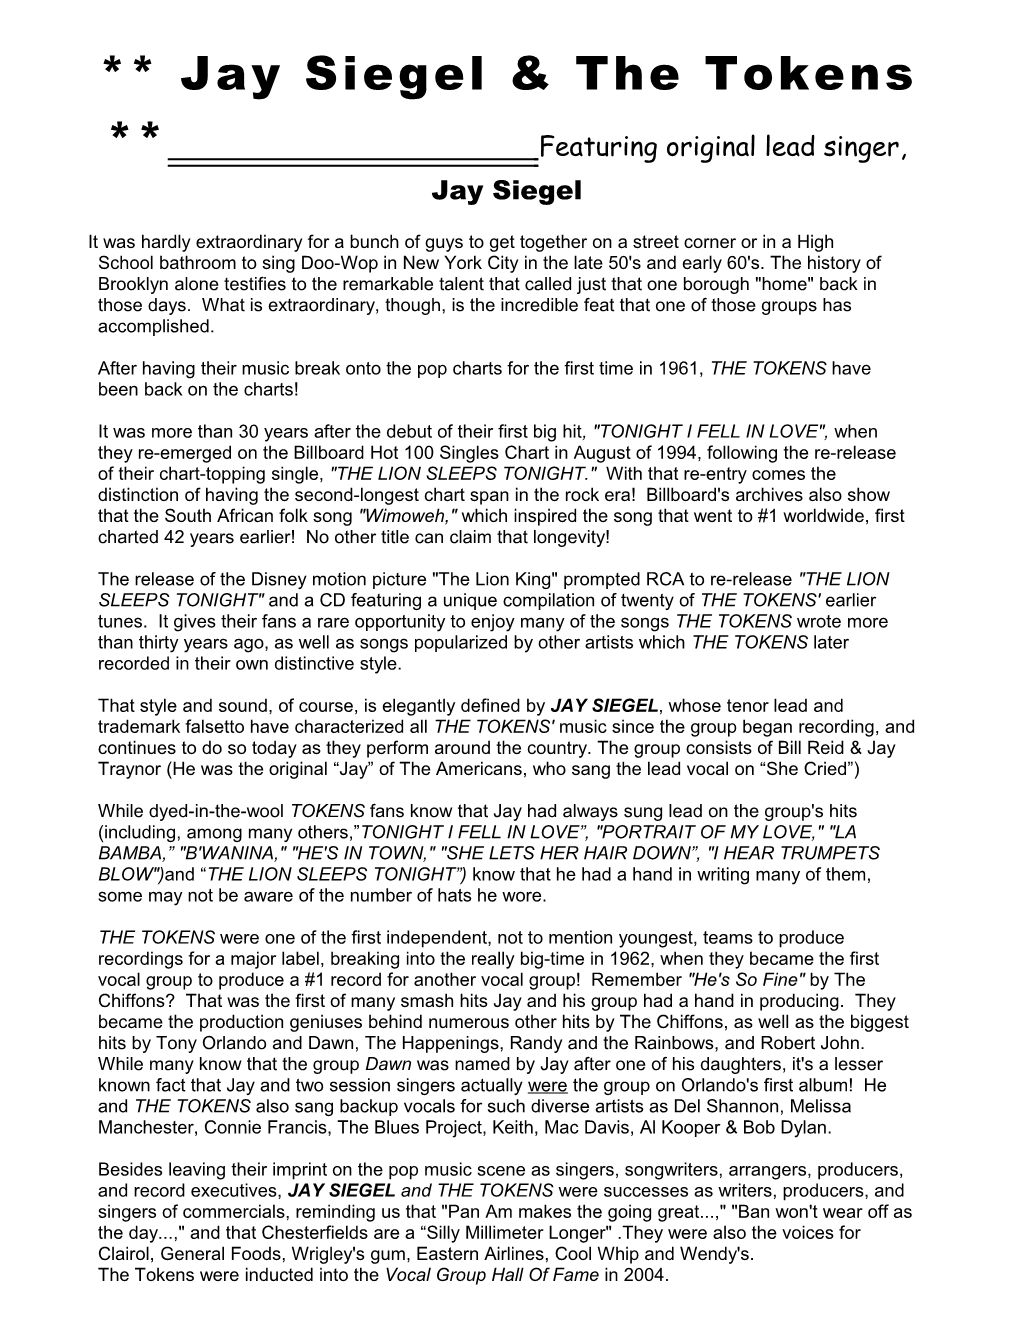 Jay Siegel & the Tokens Featuring Original Lead Singer, Jay Siegel